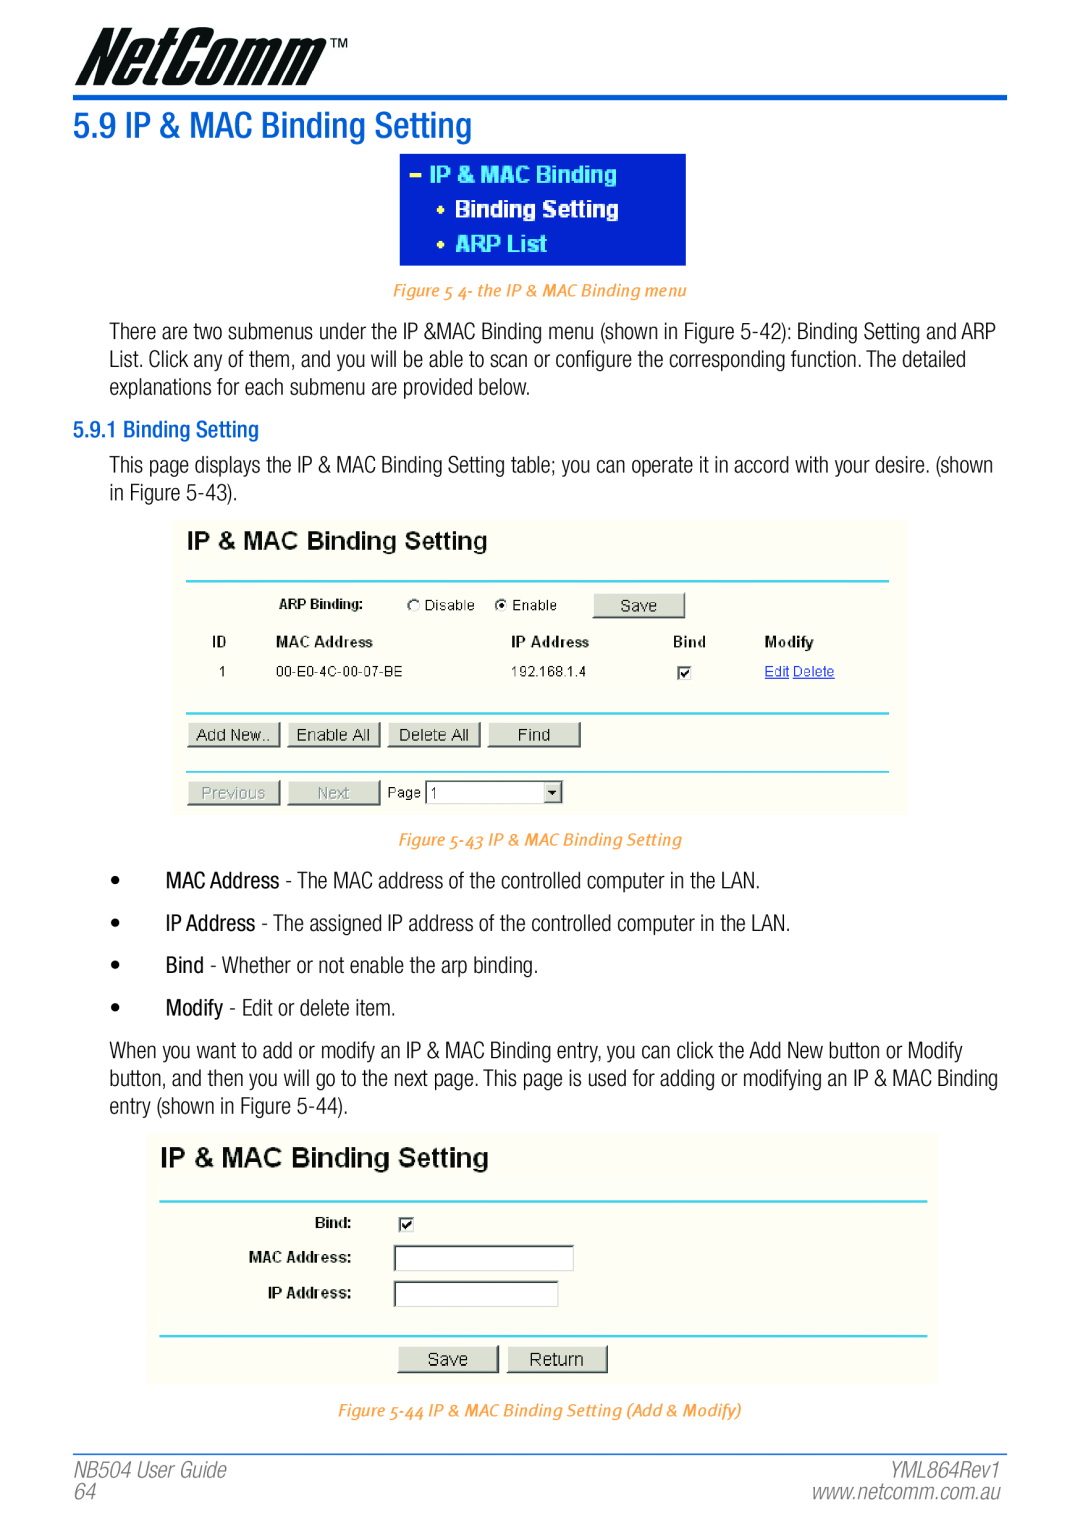 NetComm manual 5.9 IP & MAC Binding Setting, NB504 User Guide 